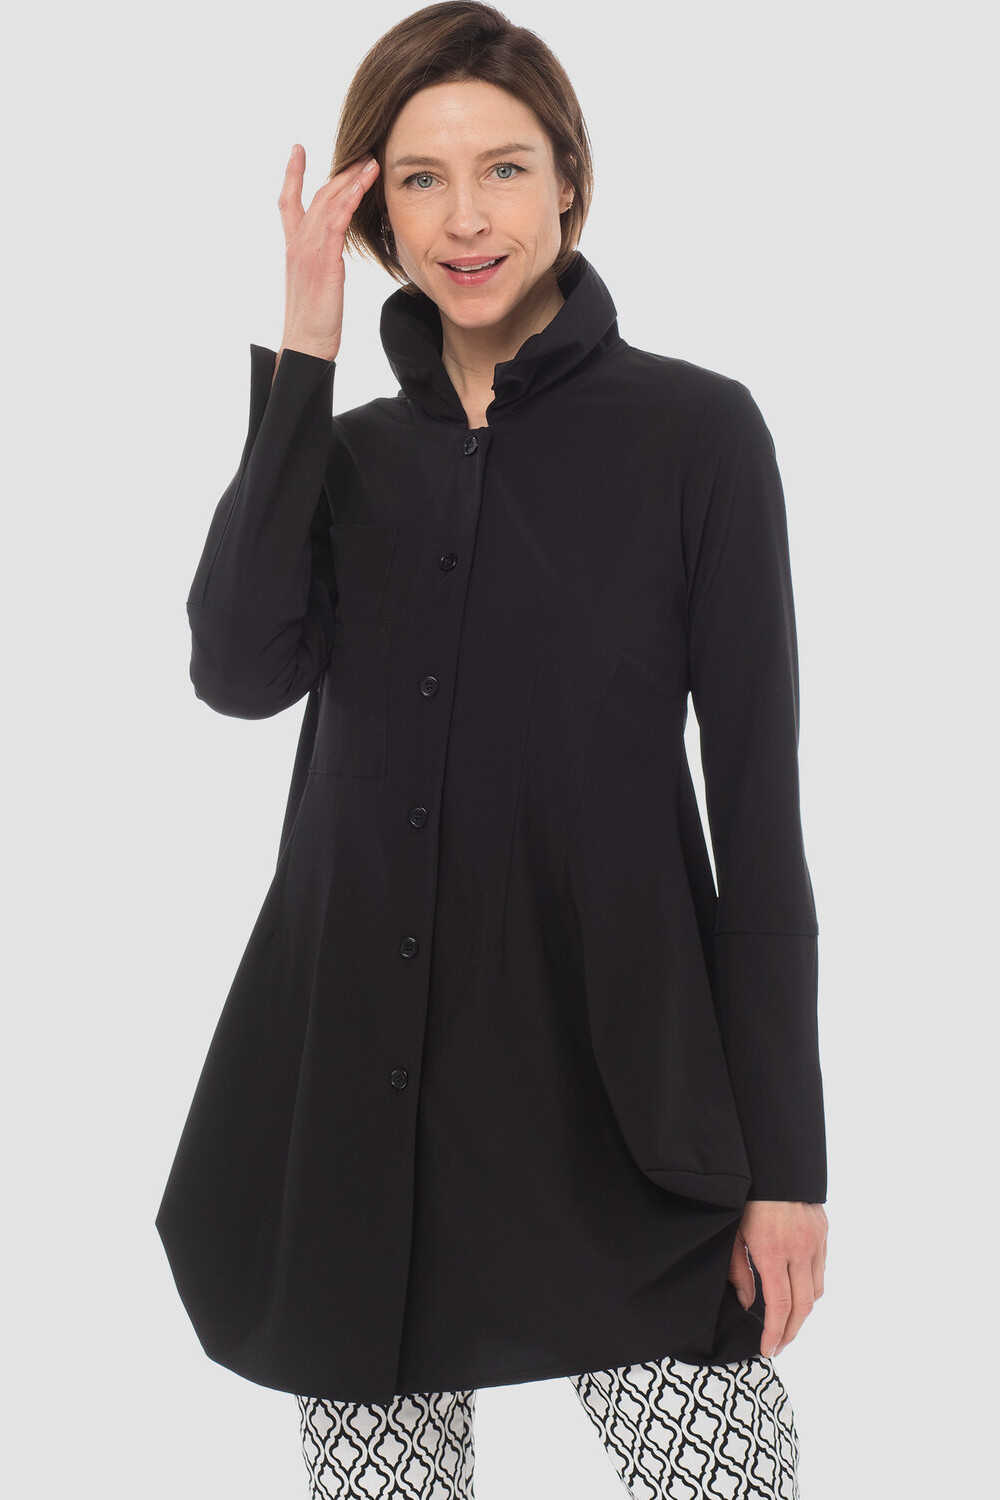 Joseph Ribkoff jacket style 181223. Black